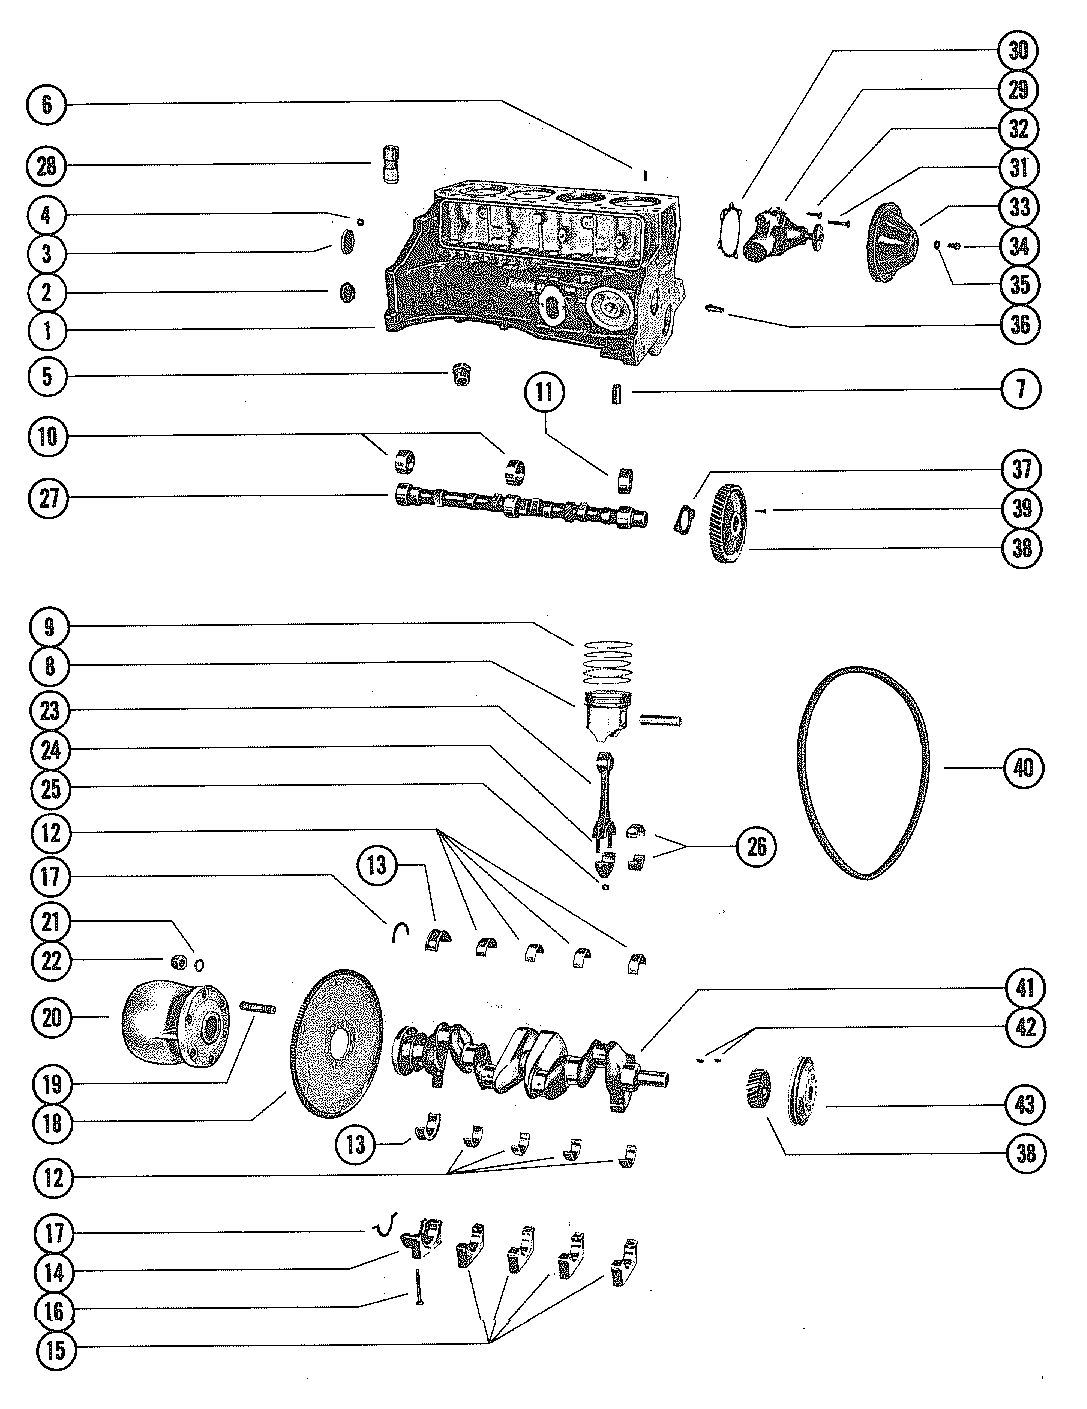 MERCRUISER 140 ENGINE (4 CYLINDER) CYLINDER BLOCK, PISTON AND CRANKSHAFT